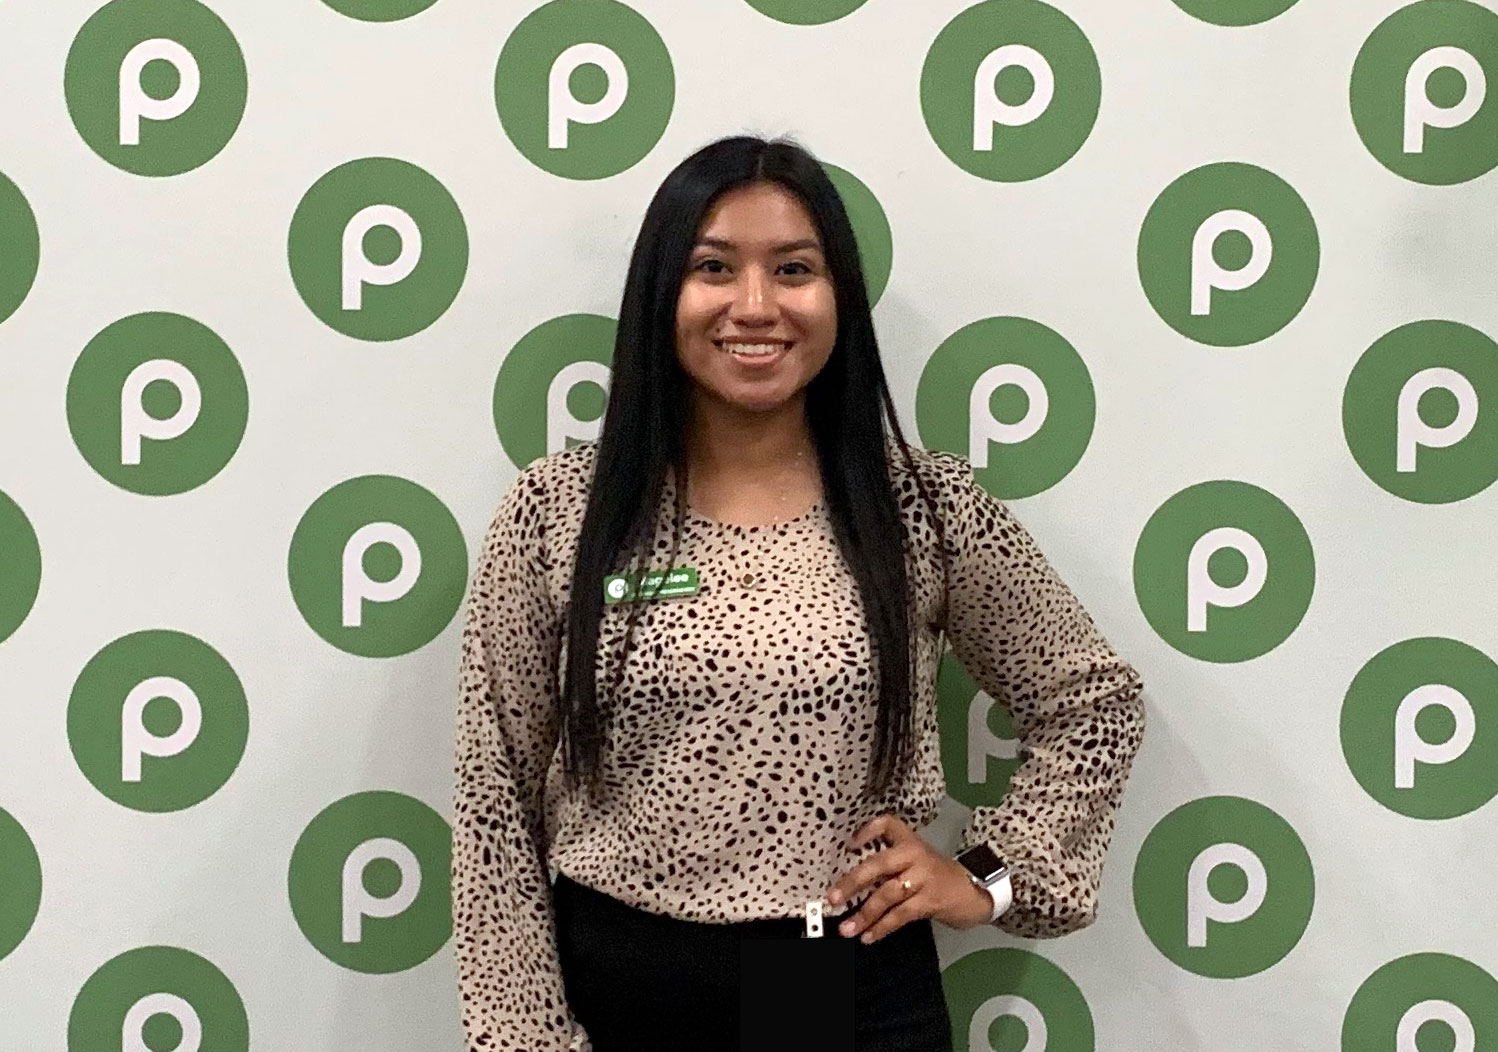 Magelee Delgado is a purchasing intern at Publix Super Markets’ headquarters.